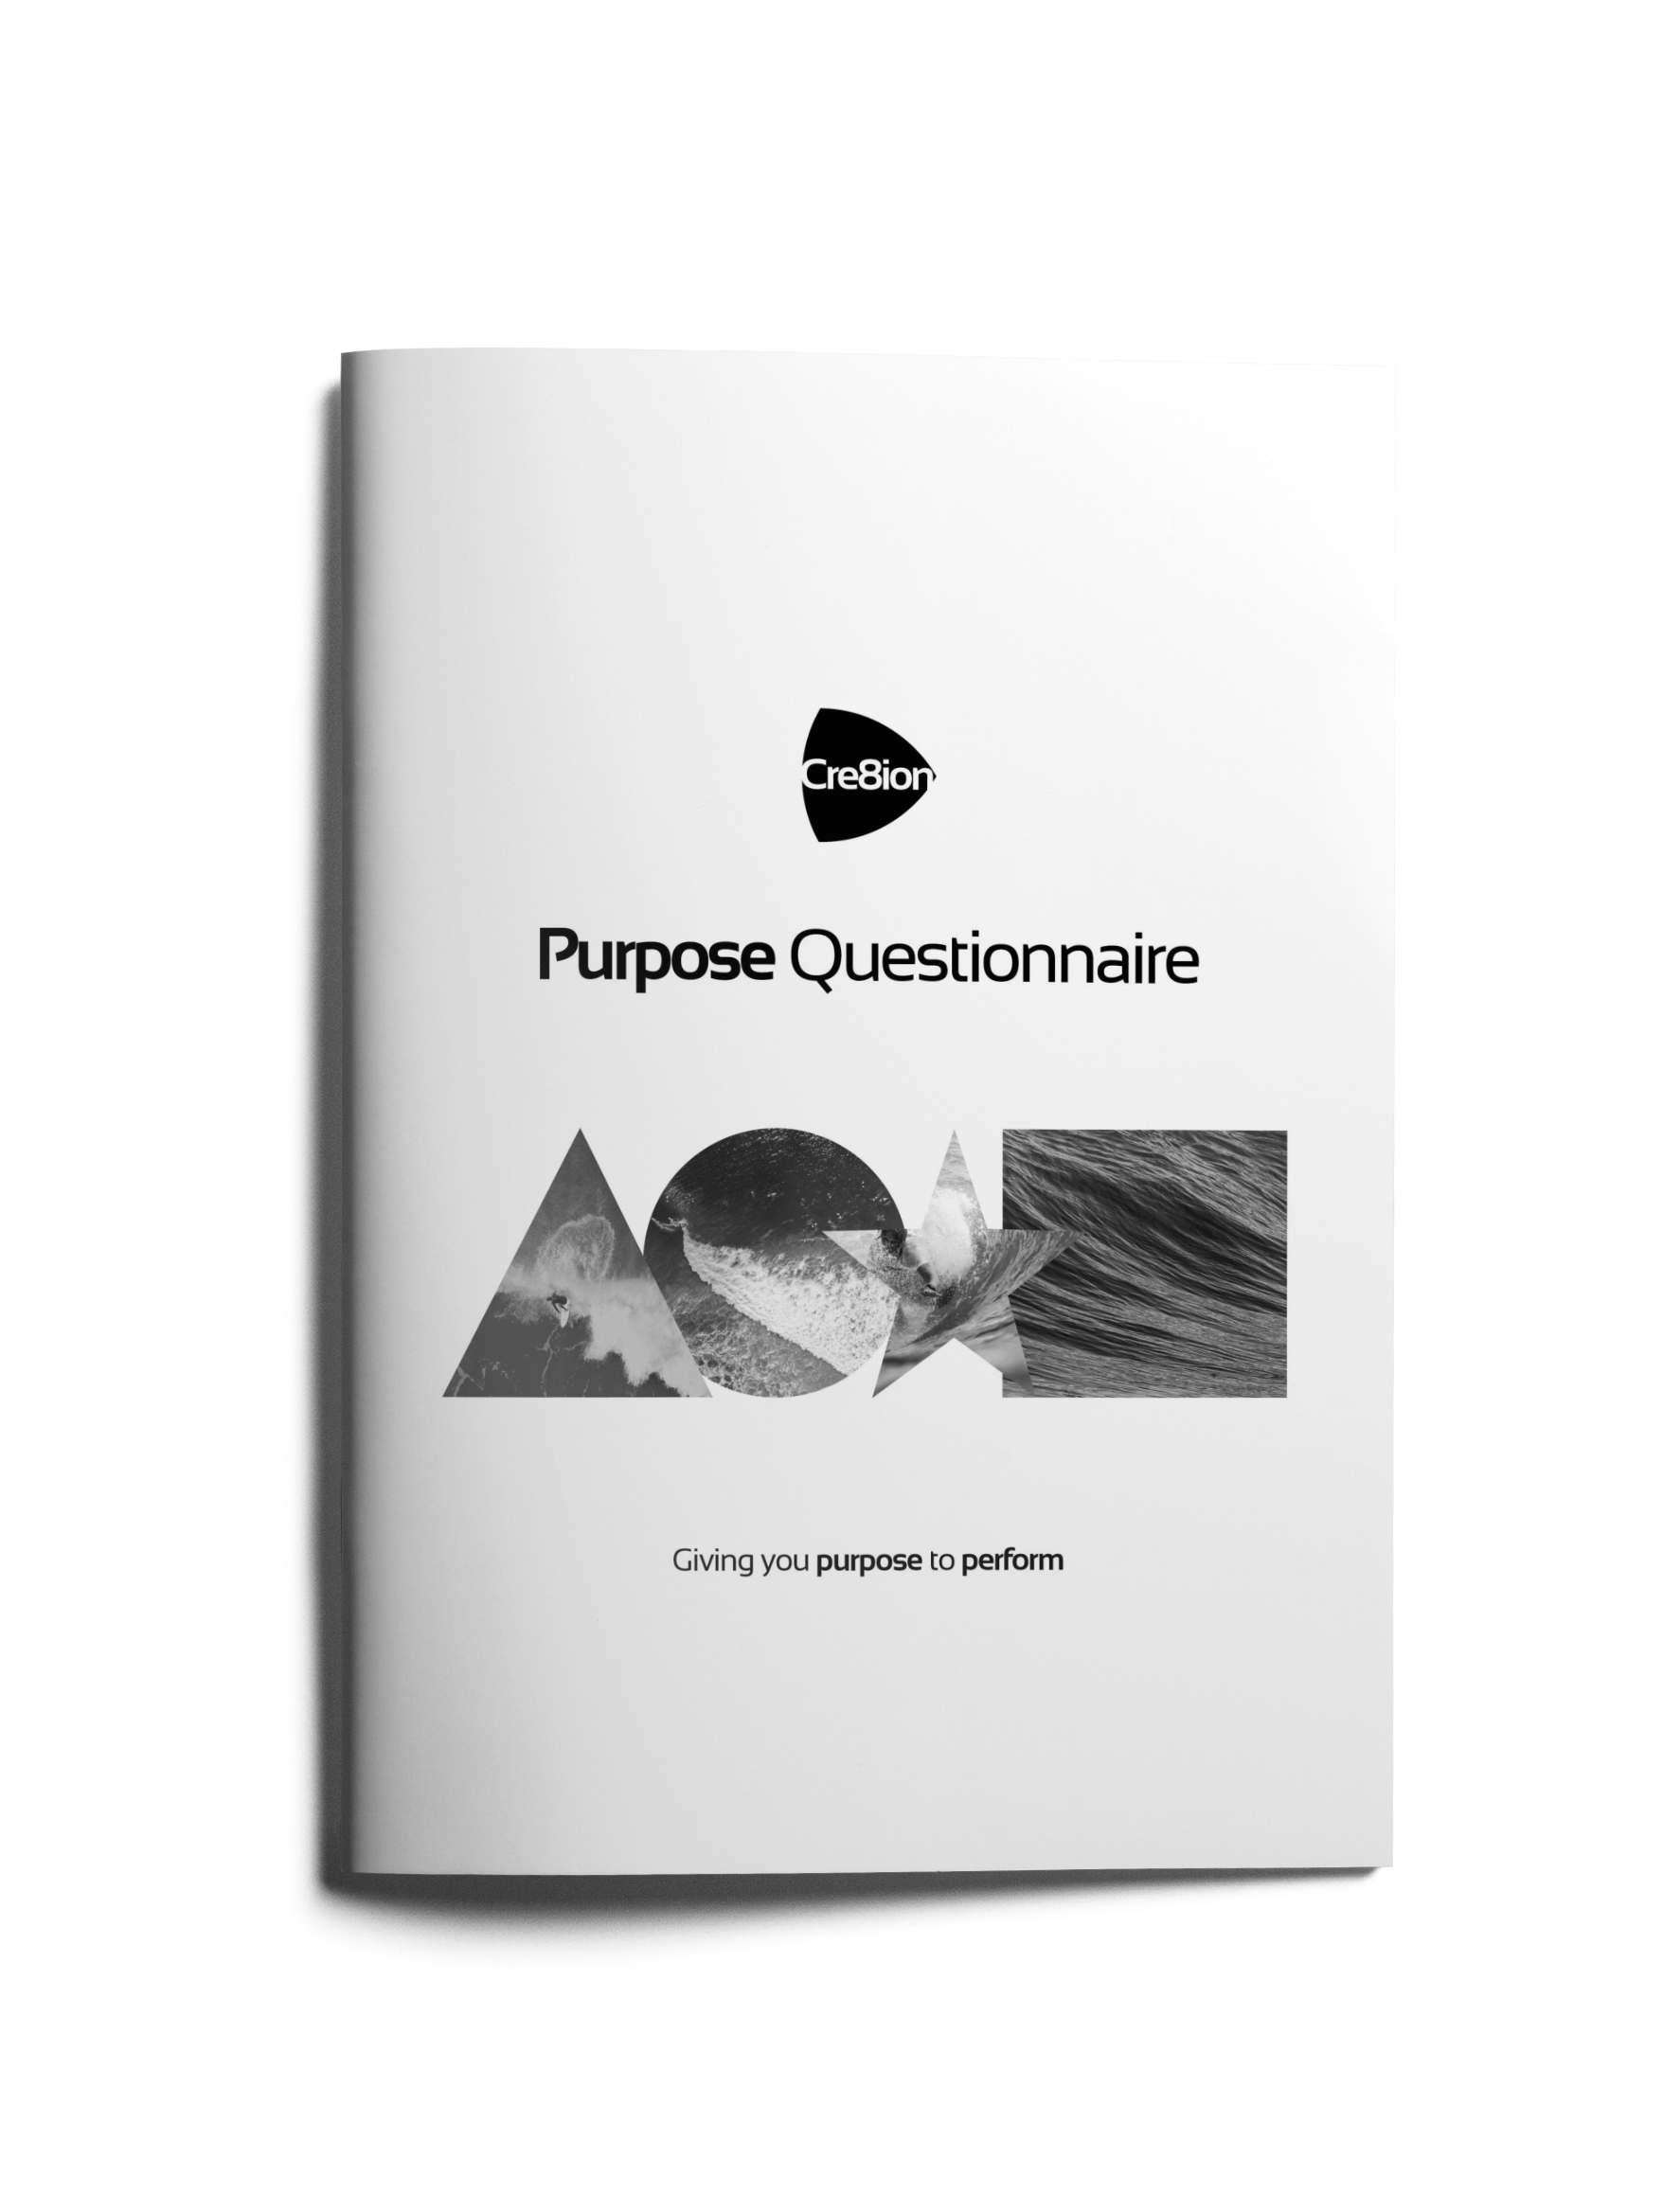 Purpose Questionnaire 2 Copy, Cre8ion